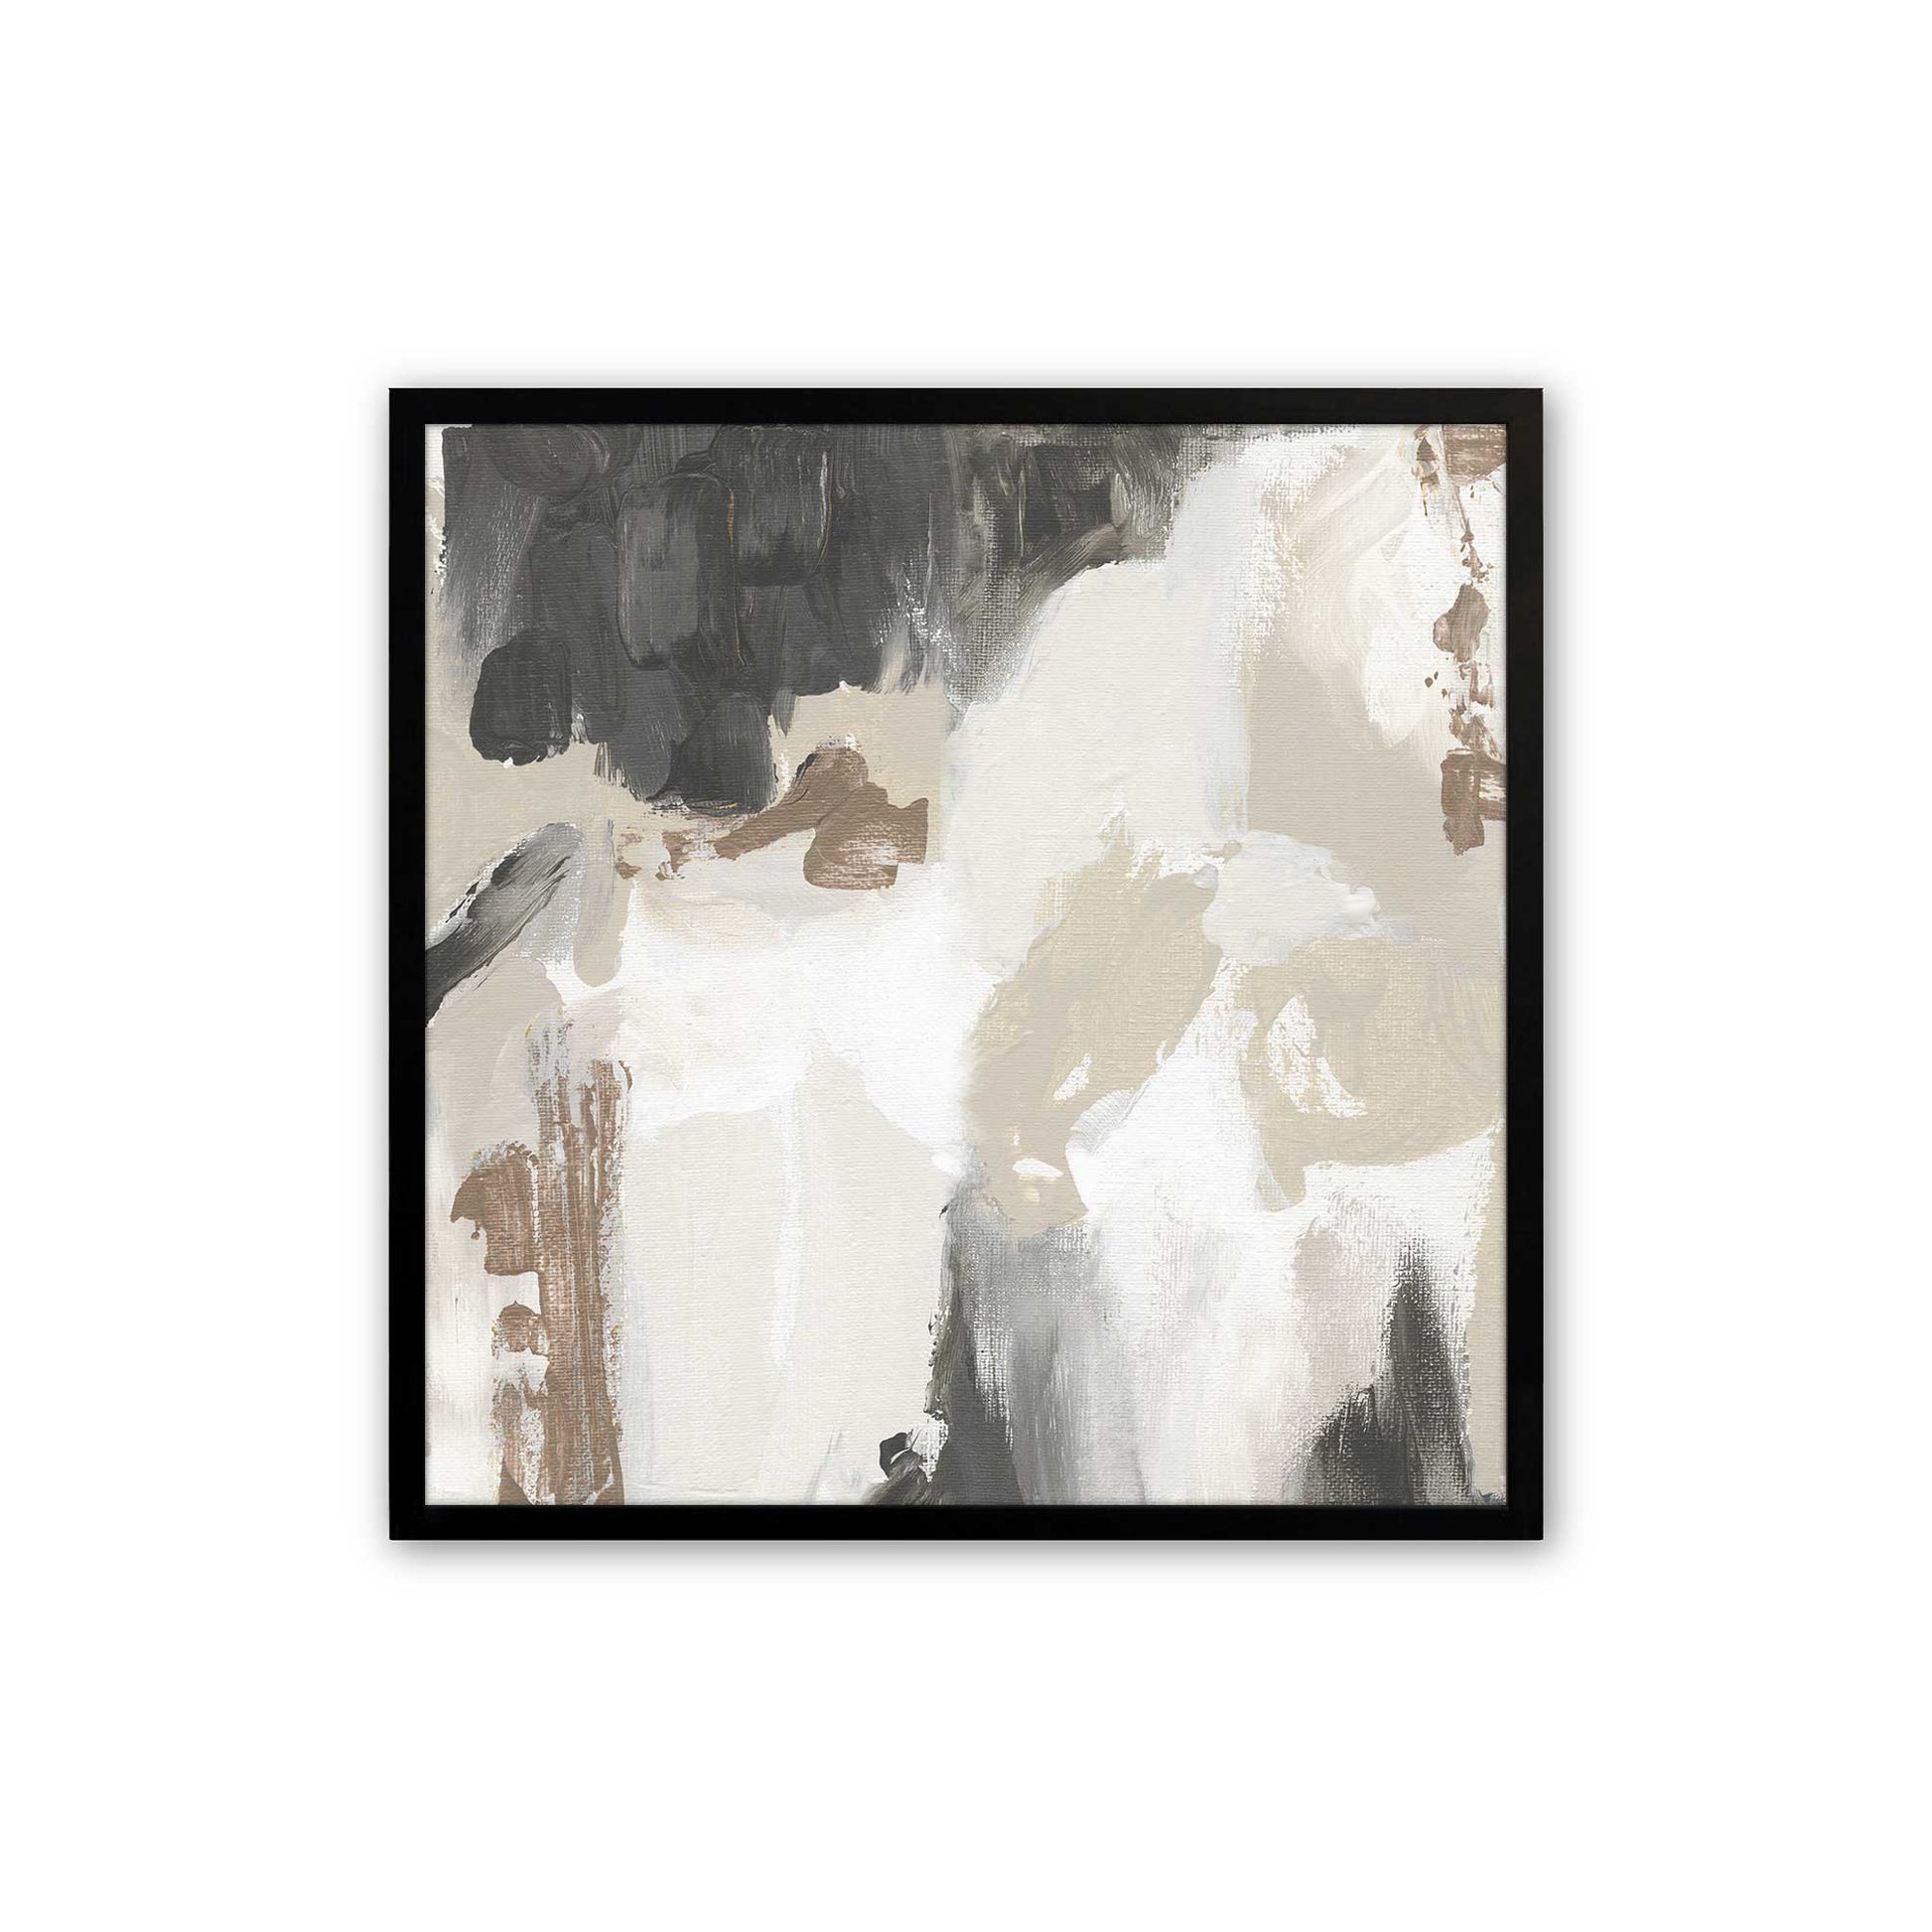 [Color:Satin Black], Picture of art in a Satin Black frame